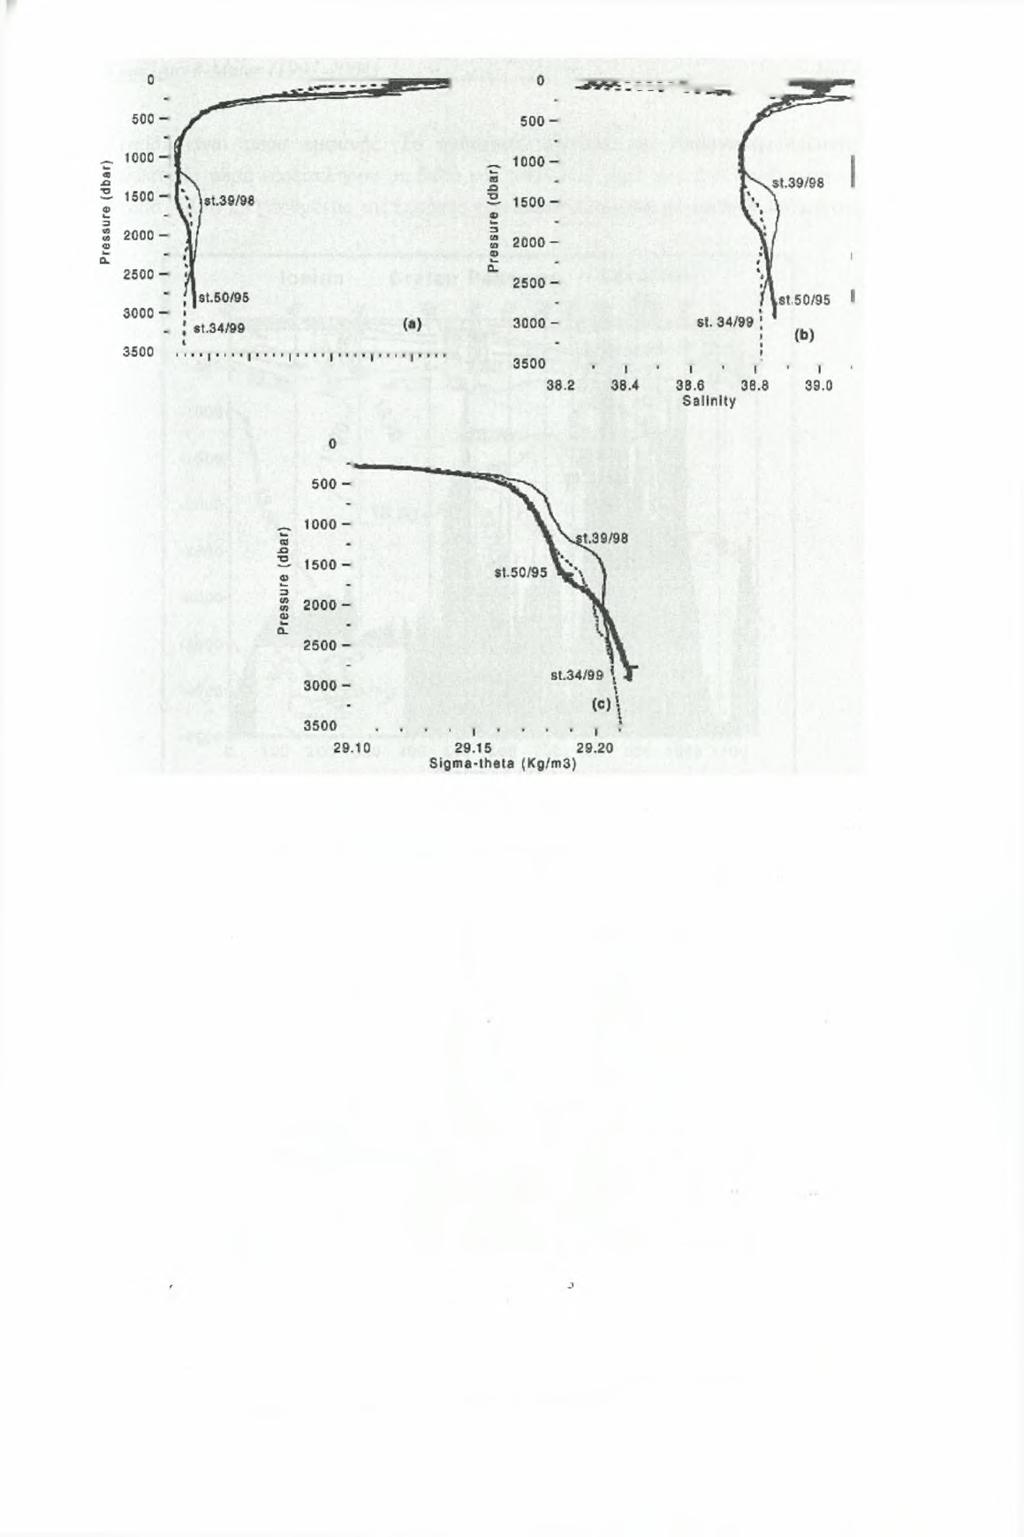 13.S 14.0 14.5 15.0 15.5 16.0 16.5 17.0 Potential Temperature {deg, C) Εικόνα 8.3.4α,β,γ: Προφίλ θερμοκρασίας (α), αλατότητας (β) και διάγραμμα T-S (γ) στο Κρητικό Πέρασμα τον Ιανουάριο του1995 και τους Οκτώβριο/Νοέμβριο του 1998 (St.